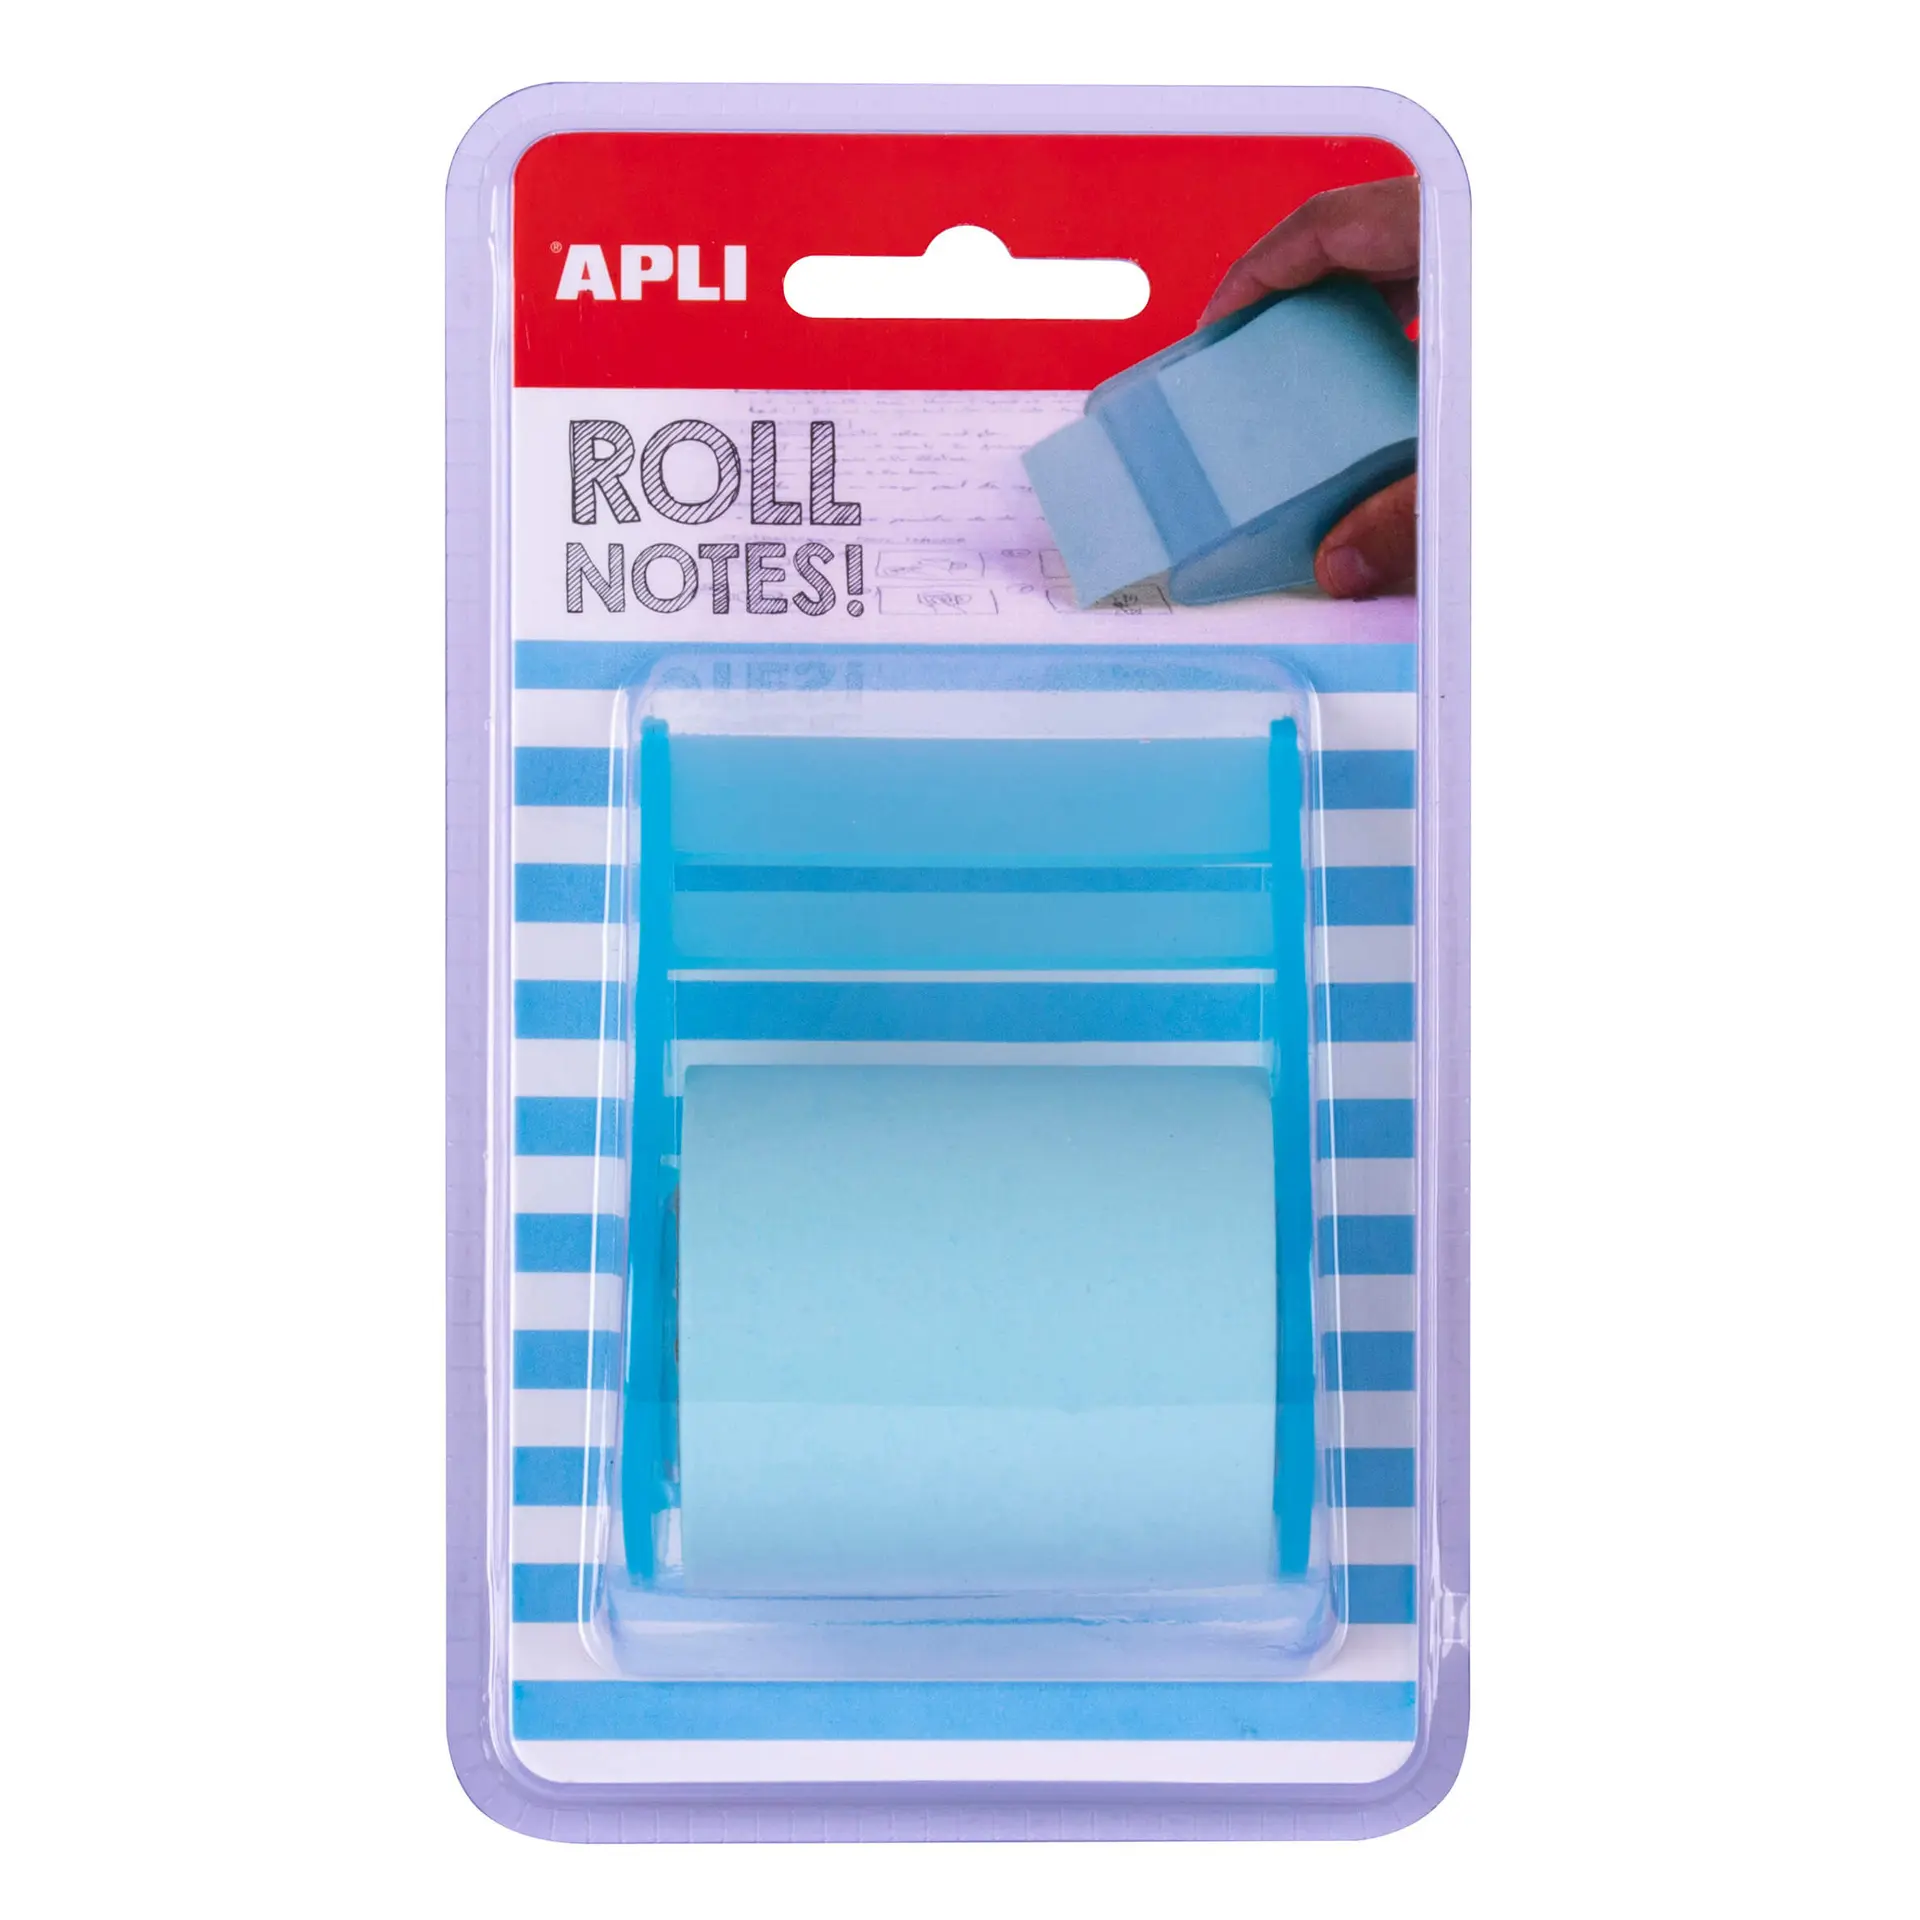 Apli Rollo Dispensador de Nota Adhesiva 50mm x 8m - Facil de Usar - Adhesivo de Calidad - Diseo Erg